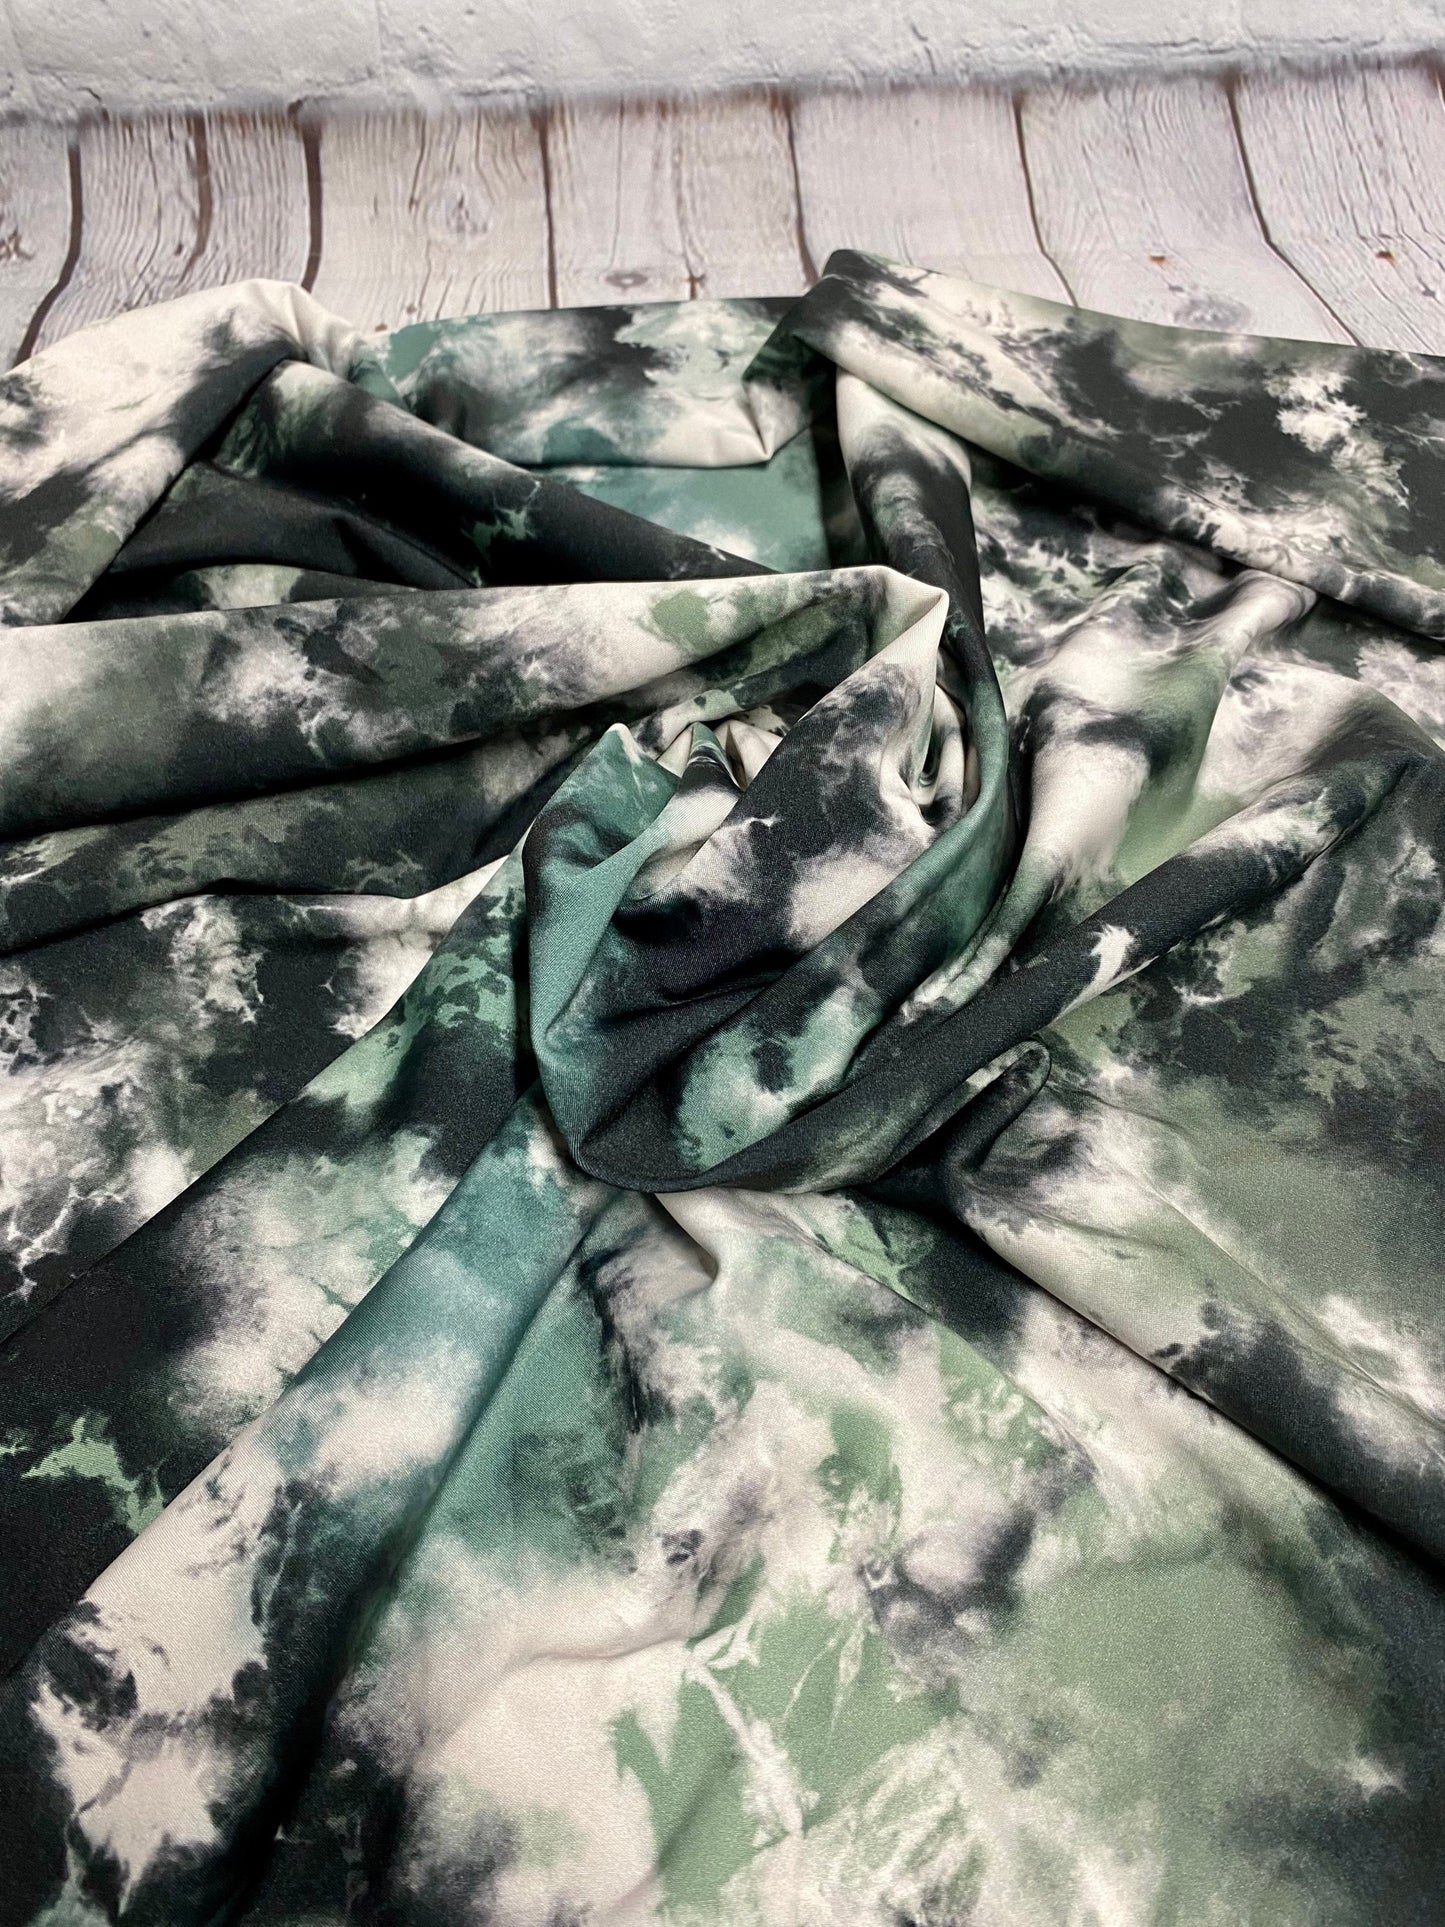 4 Way Stretch Print Nylon Spandex Fabric By The Yard Tricot Swim Wear Bikini Active Wear Acid Wave Tie Dye Green Olive White Black 280 GSM